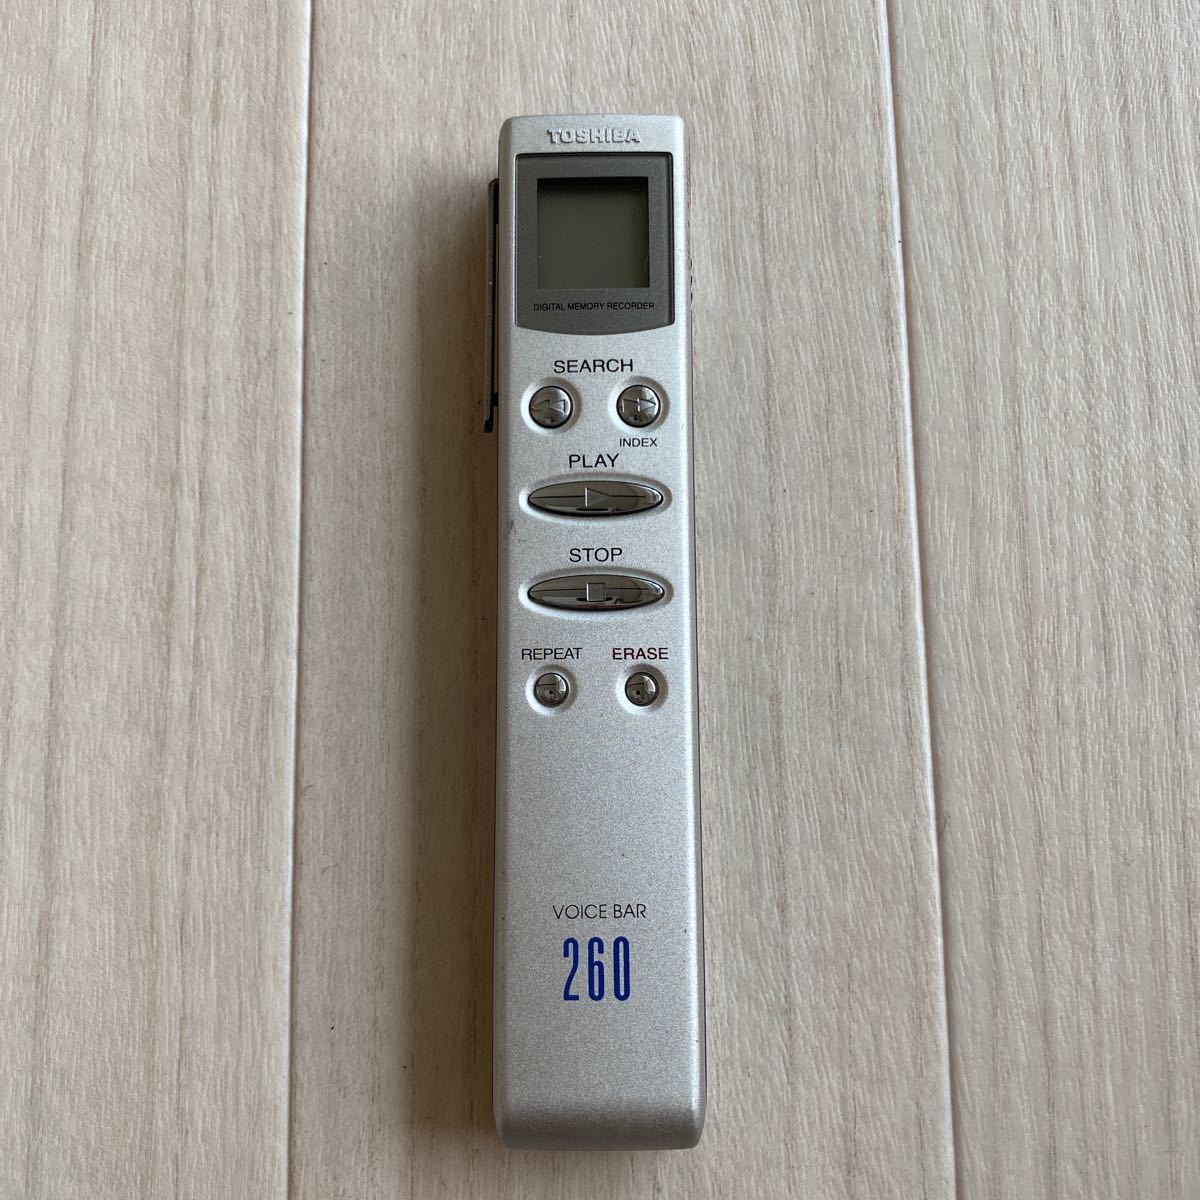 TOSHIBA VOICE BAR DMR-260X 東芝 ICレコーダー ボイスレコーダー 送料無料 S677_画像1